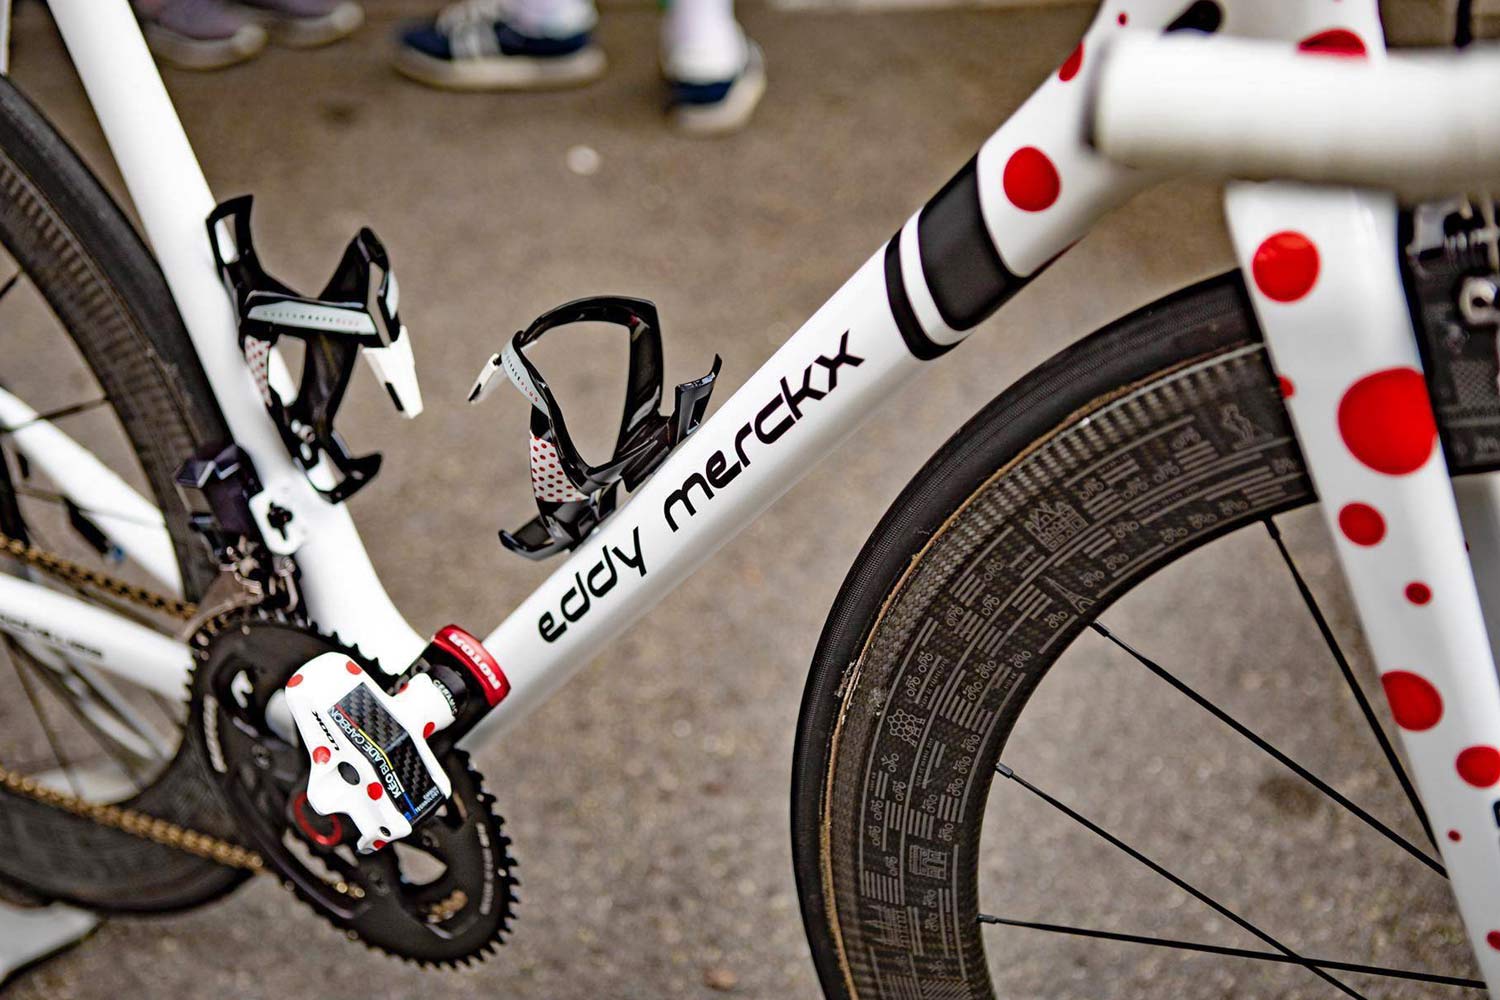 Polka-dotted Stockeu69 carbon road race bike for Romain Bardet